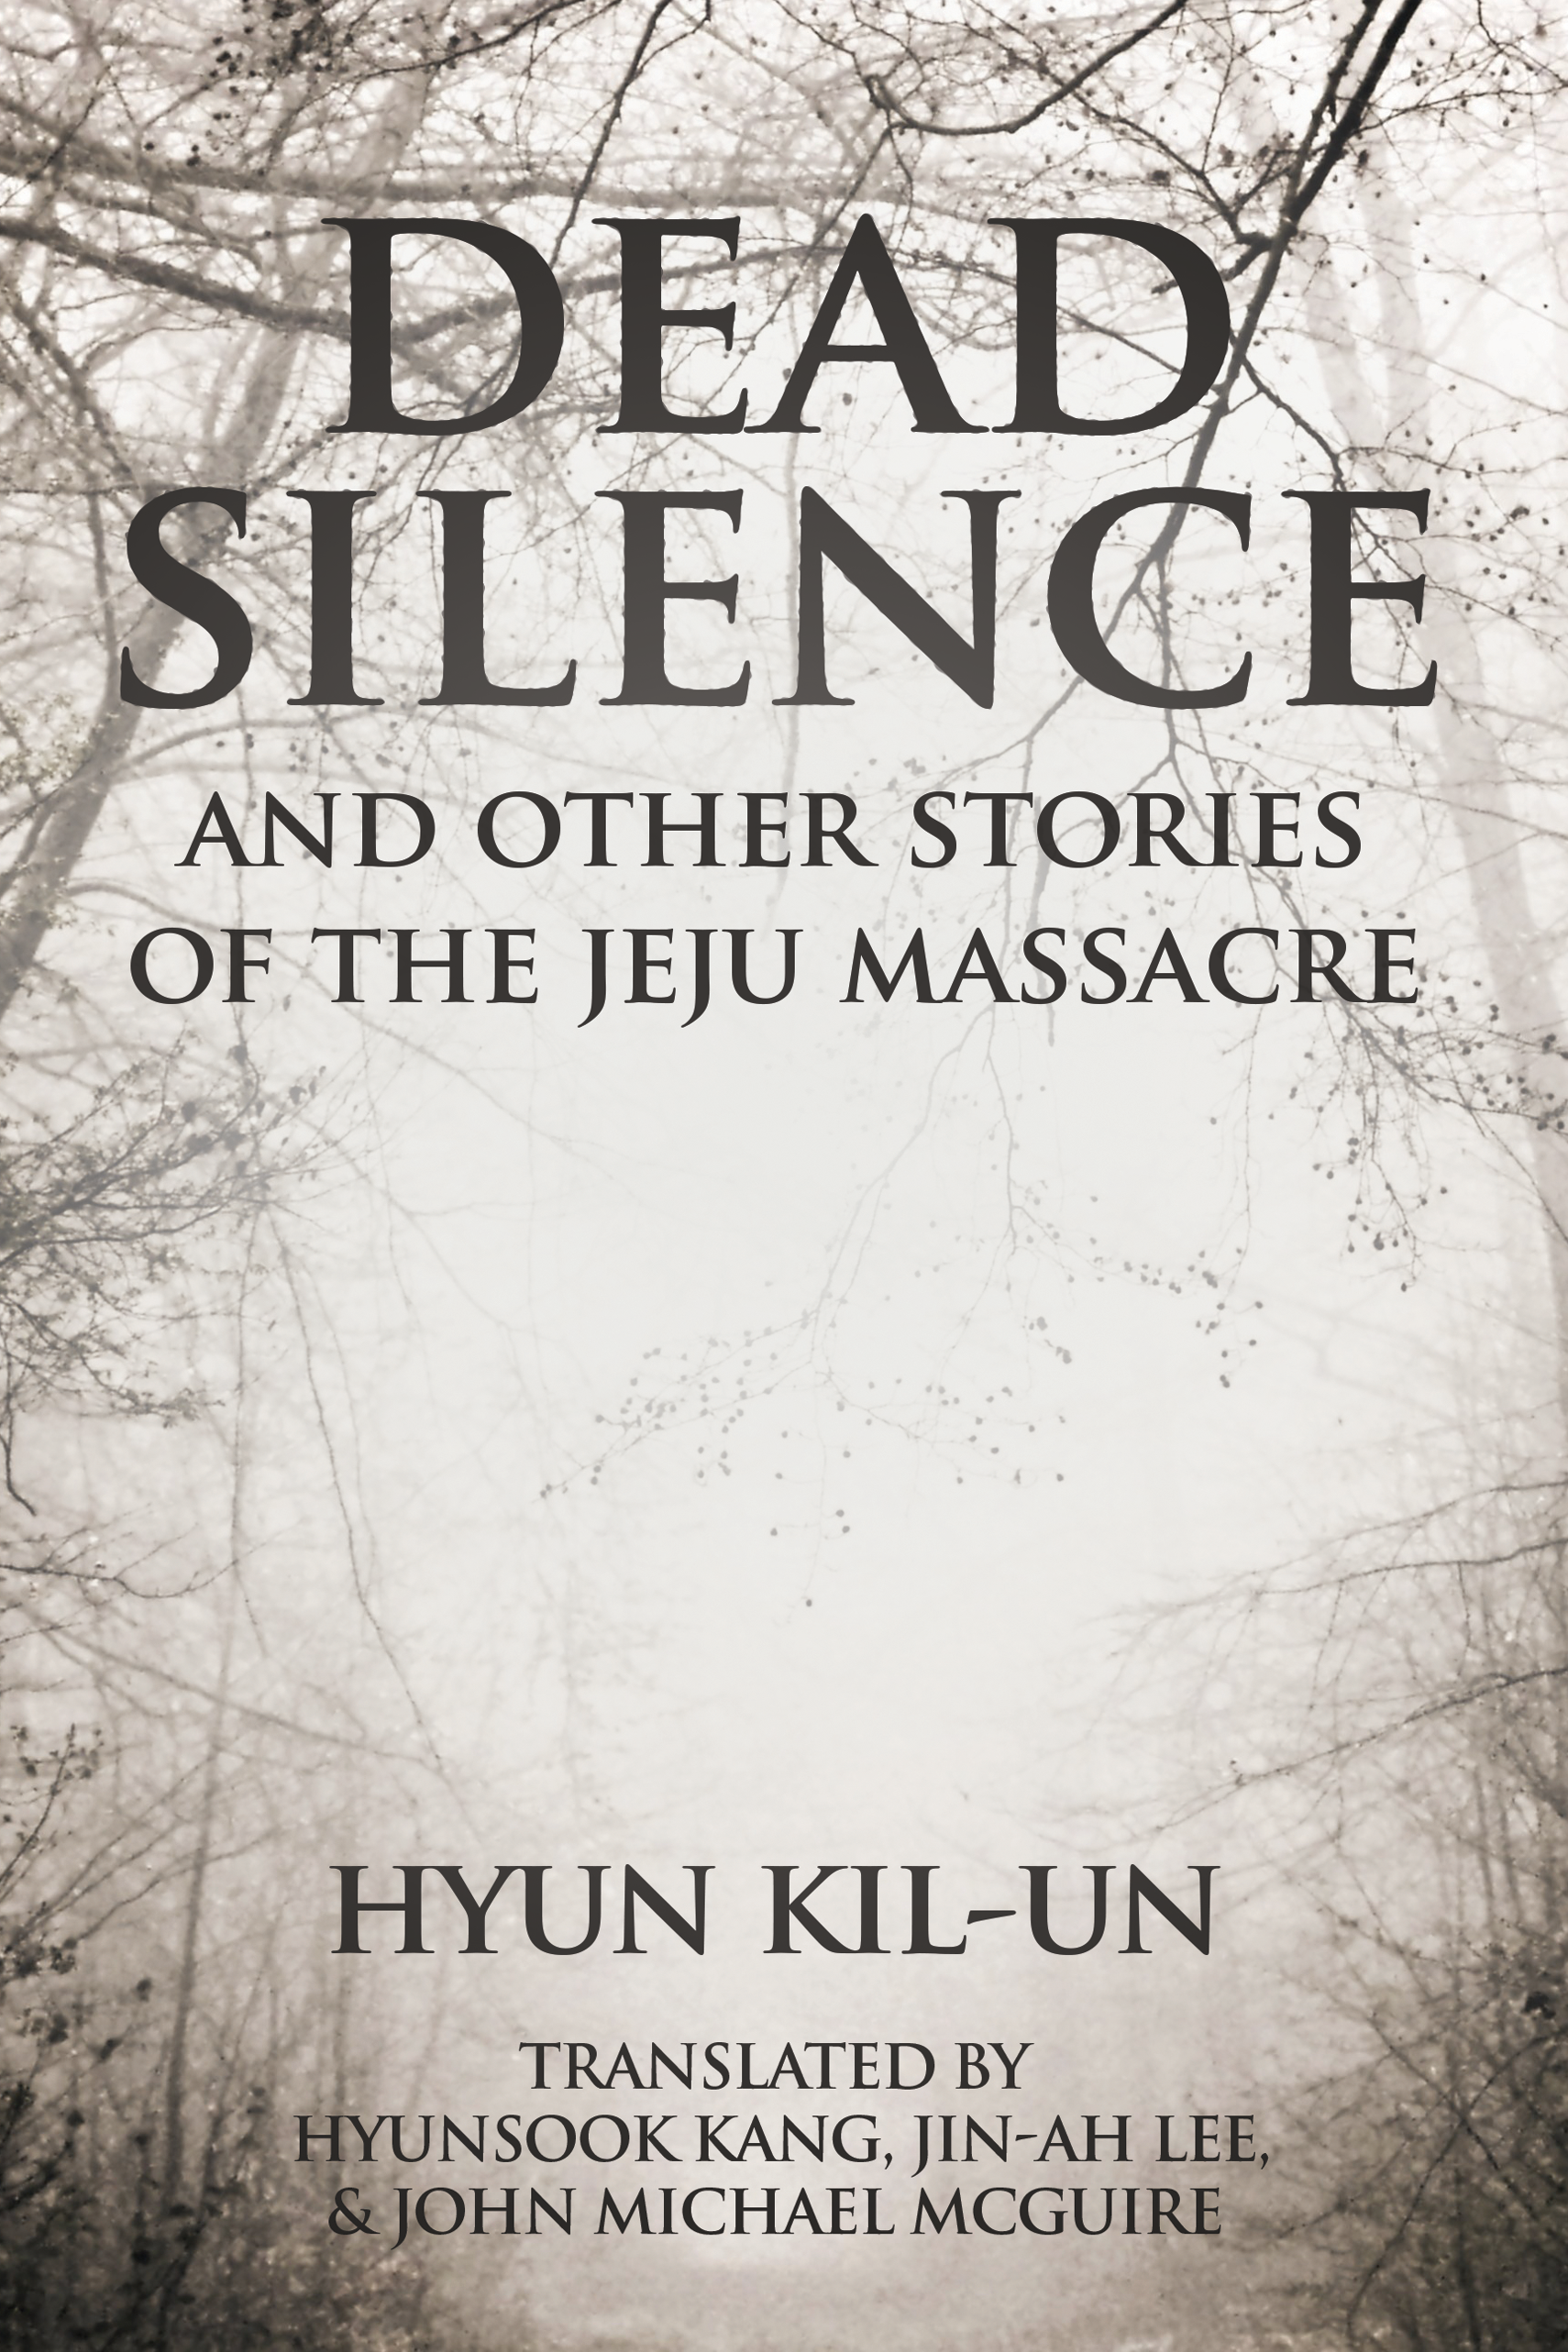 Cover of Dead Silence by Hyun Kil-un